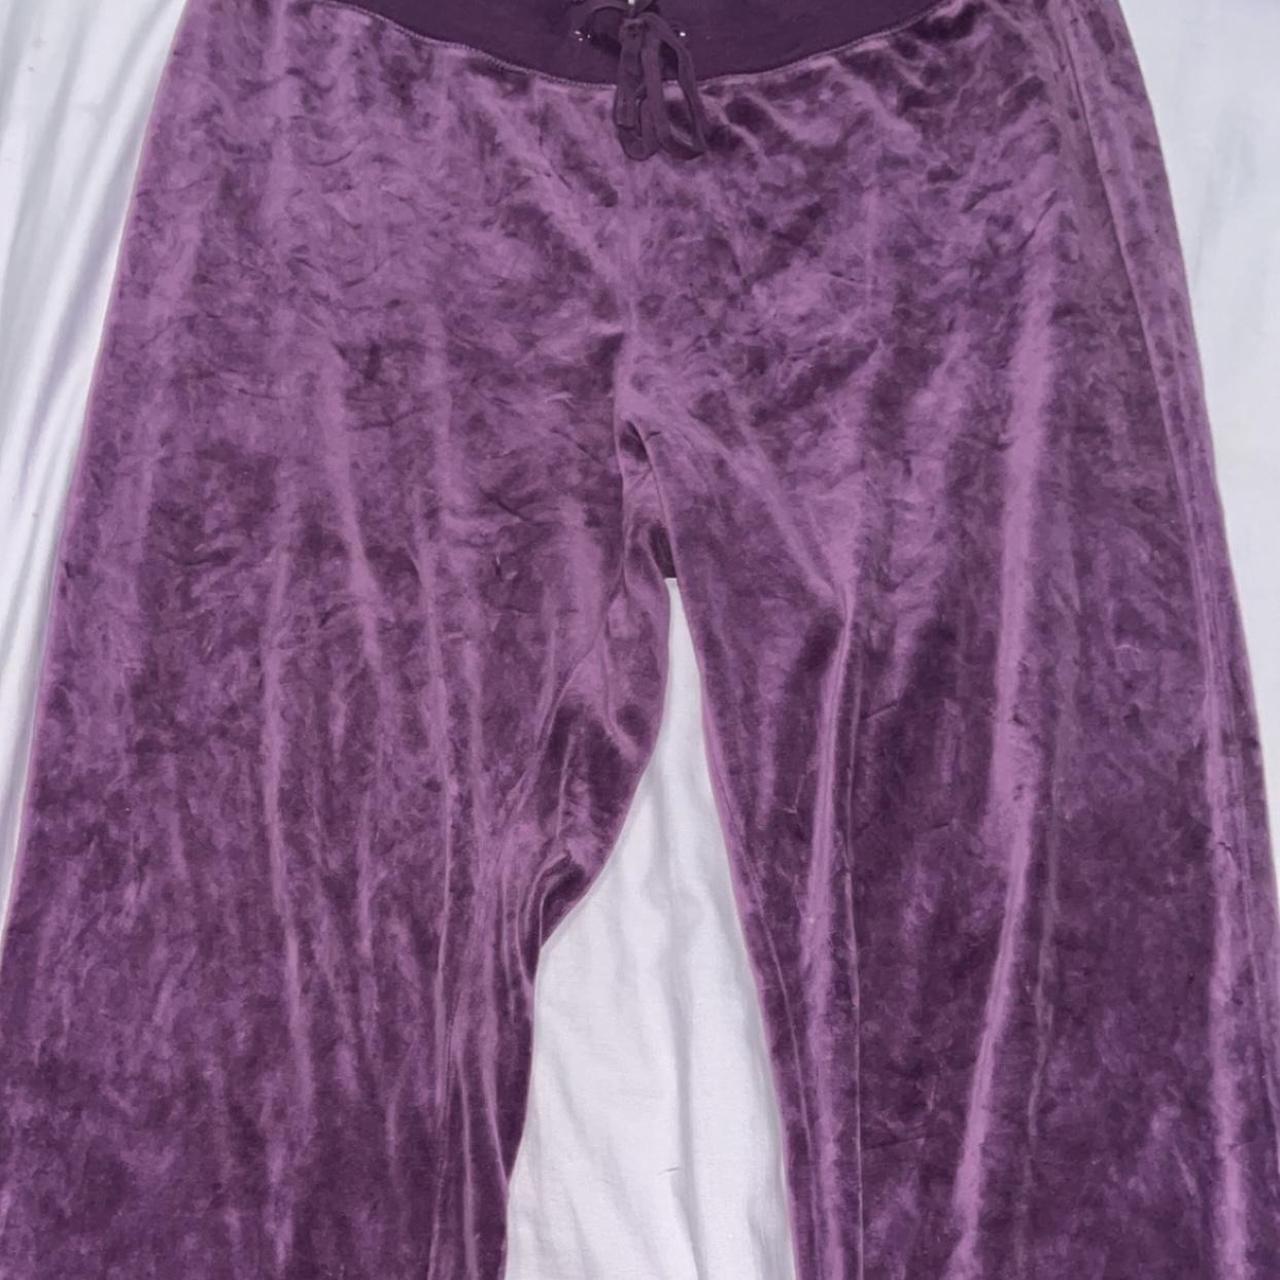 purple roots sweatpants - more purple than pic on - Depop